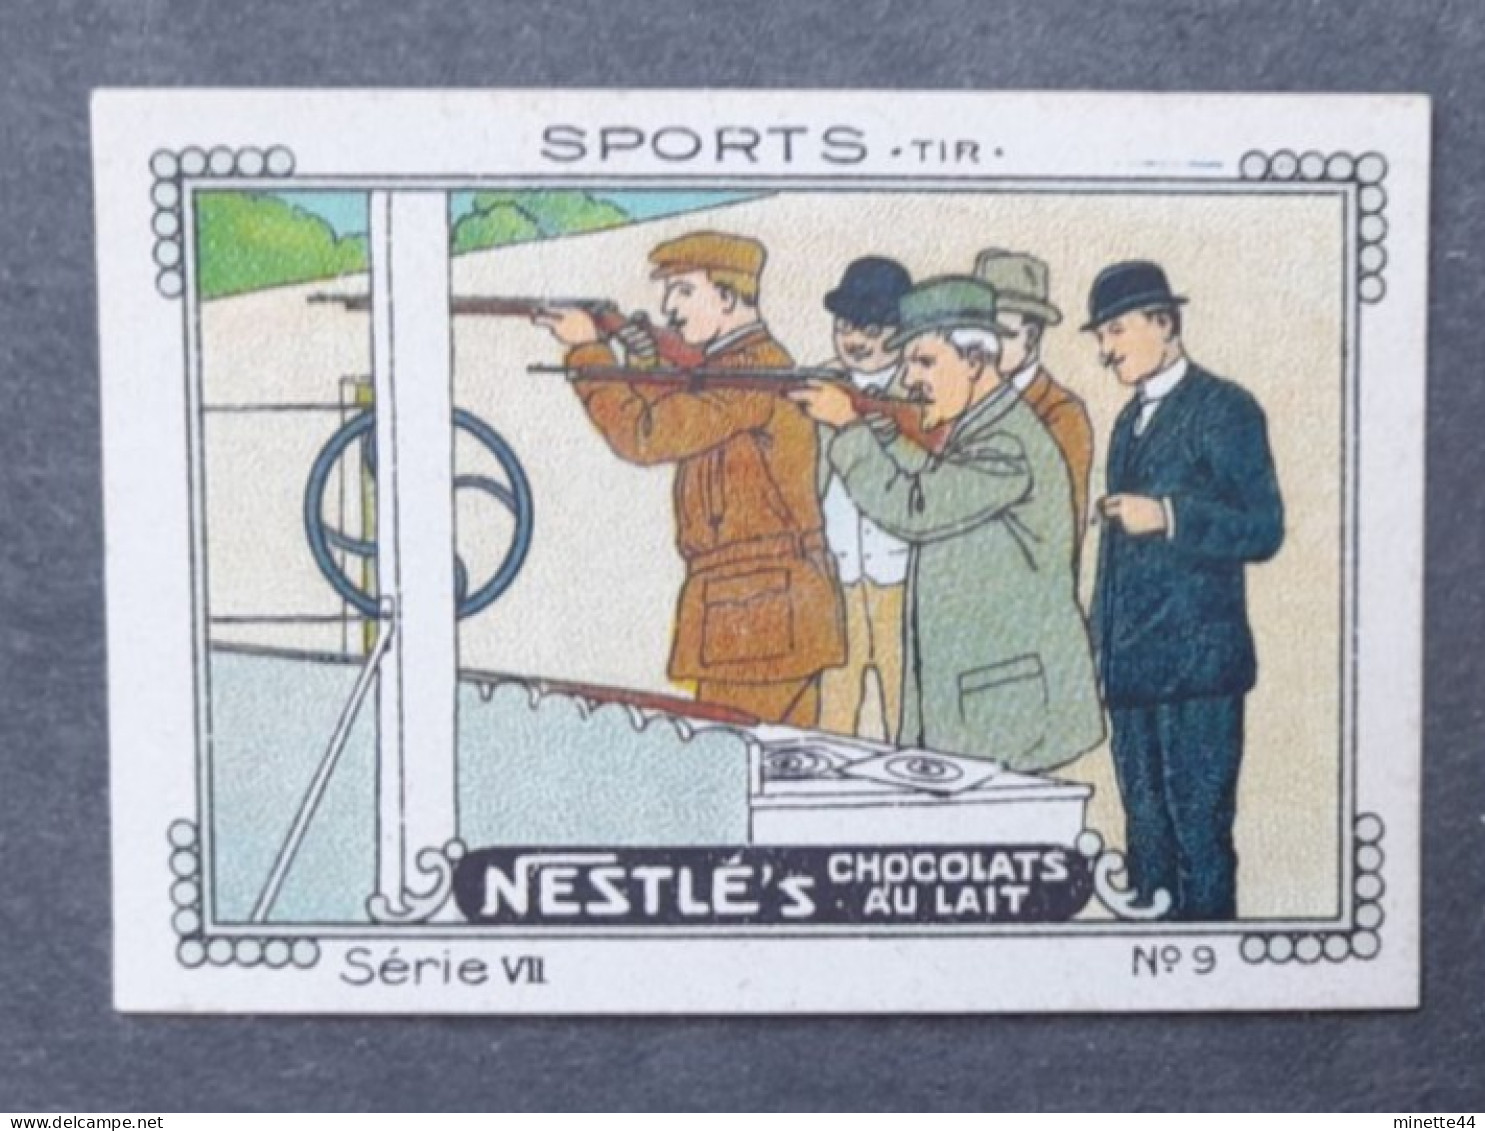 SUISSE NESTLE  1900'  TIR SHOT JEUX GAMES Imperf Nd - Schieten (Wapens)